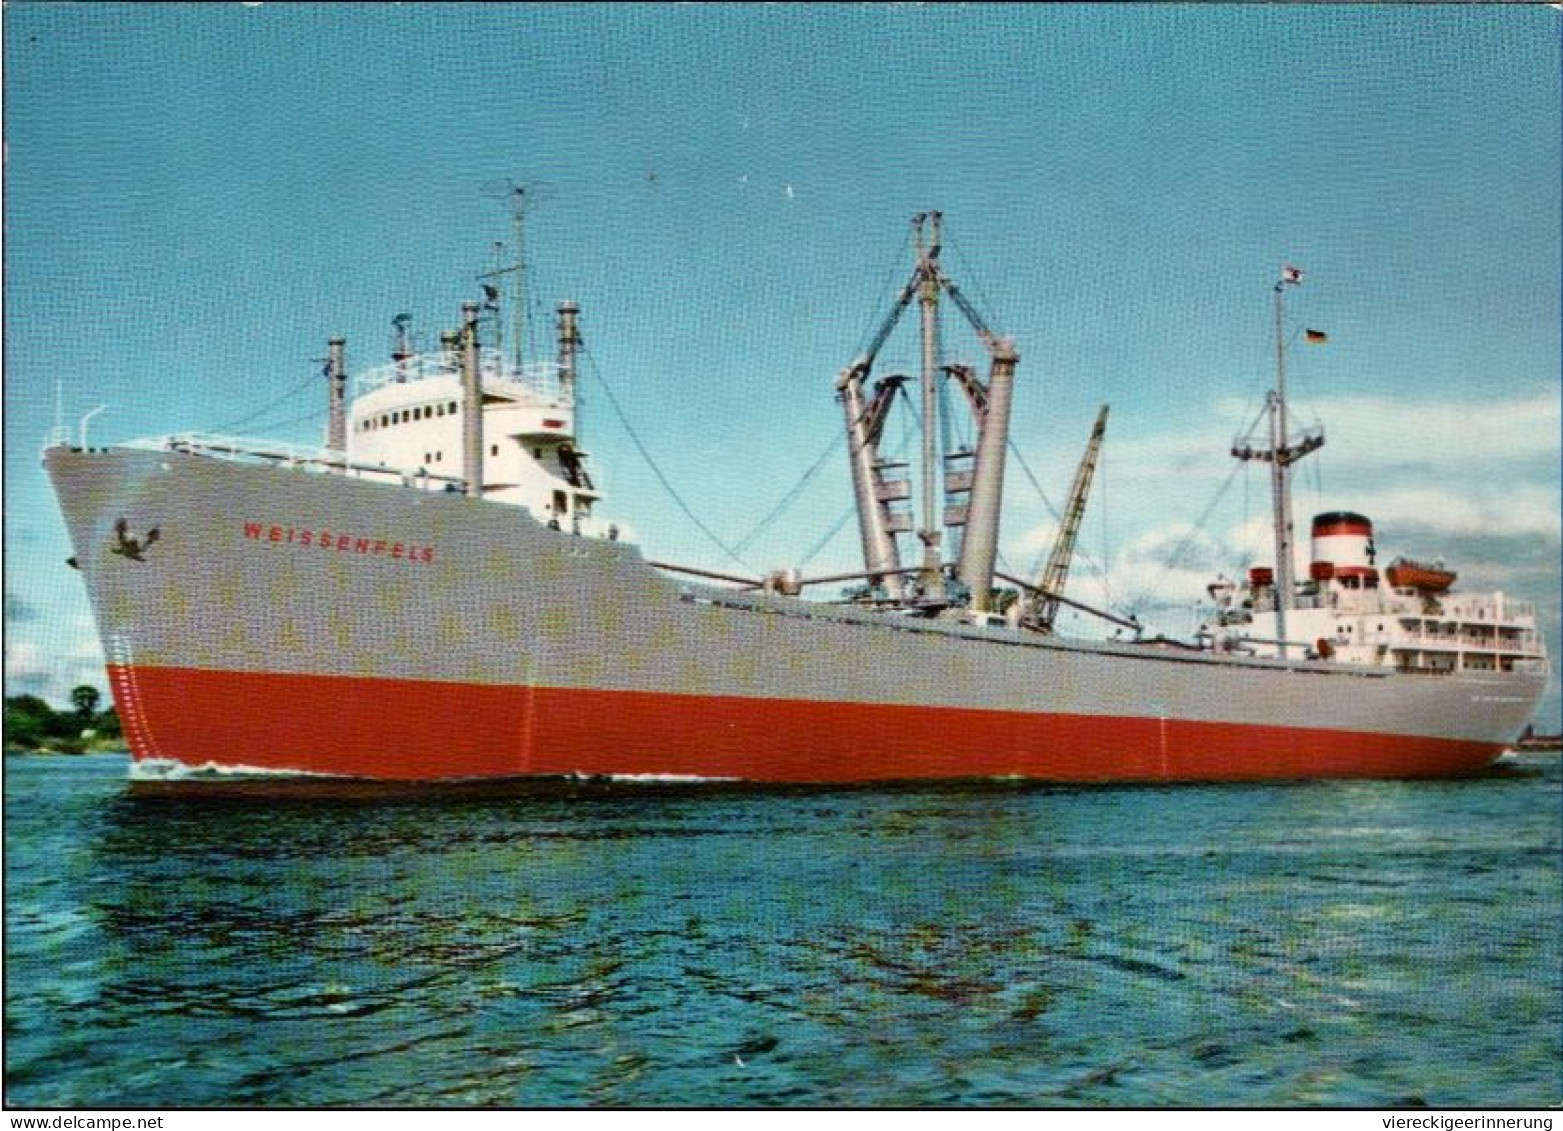 ! Ansichtskarte Ship, DDSG Hansa Bremen, Schiff MS Weissenfels, Frachter - Koopvaardij